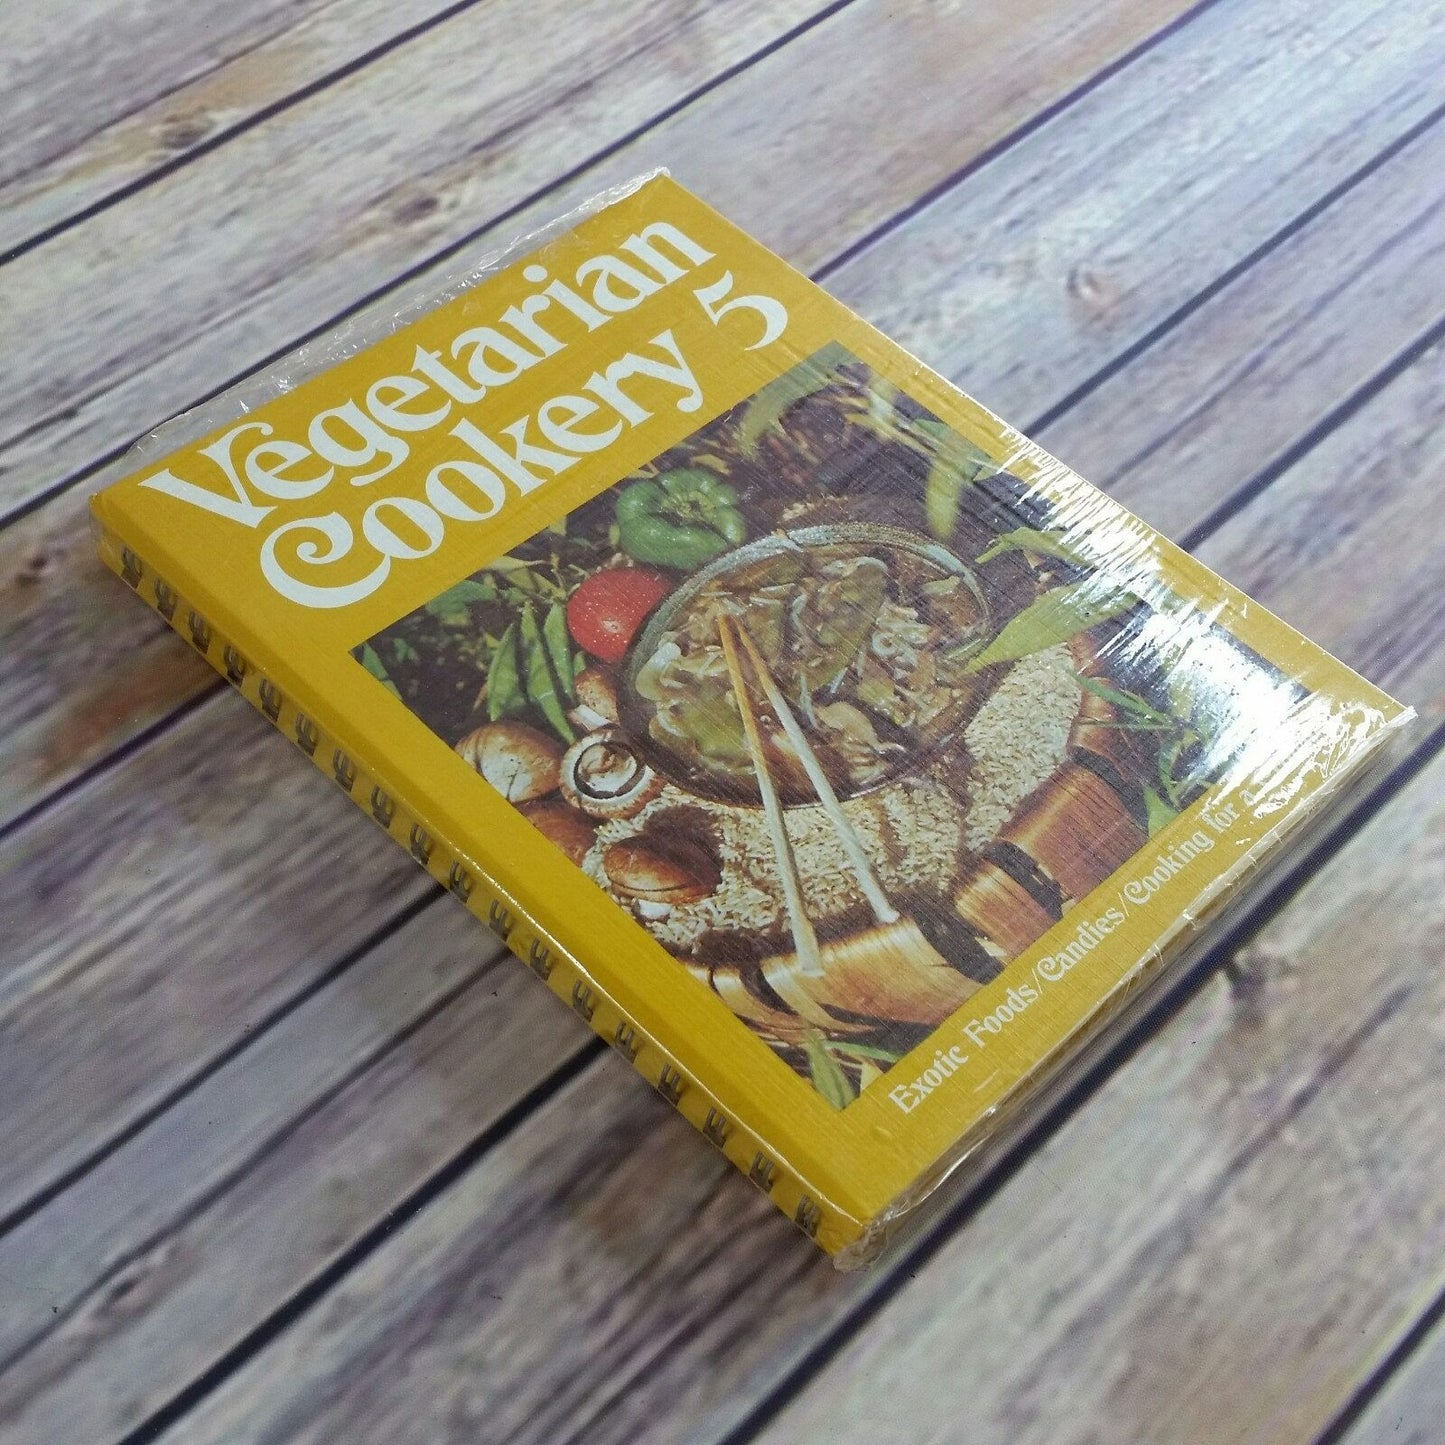 Vintage Vegetarian Cookery 5 Cookbook 1971 Vegetables Health Food Natural Carb Exotic Cooking for a Crowd Still Sealed in ShrinkWrap